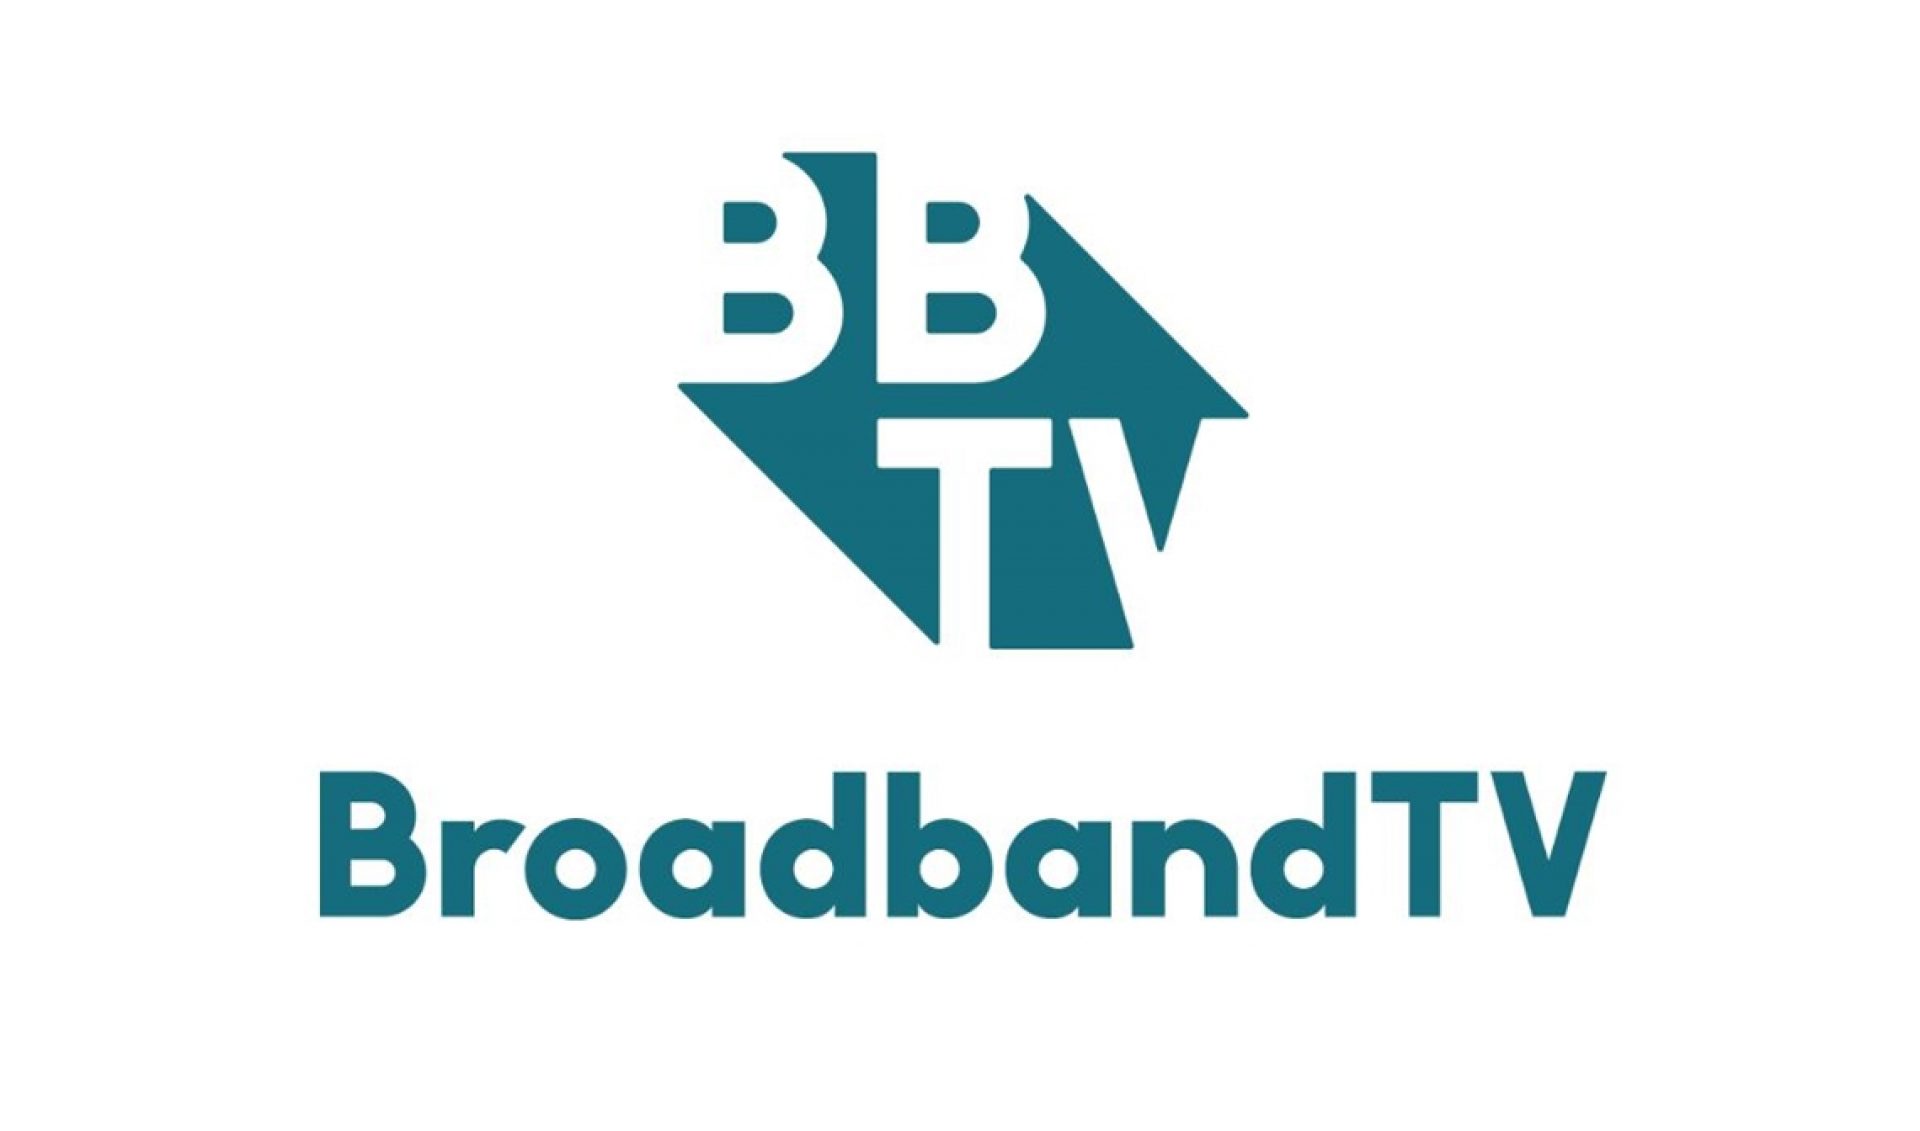 RTL Won’t Purchase Remaining BroadbandTV Shares, Will Explore “Strategic Alternatives”